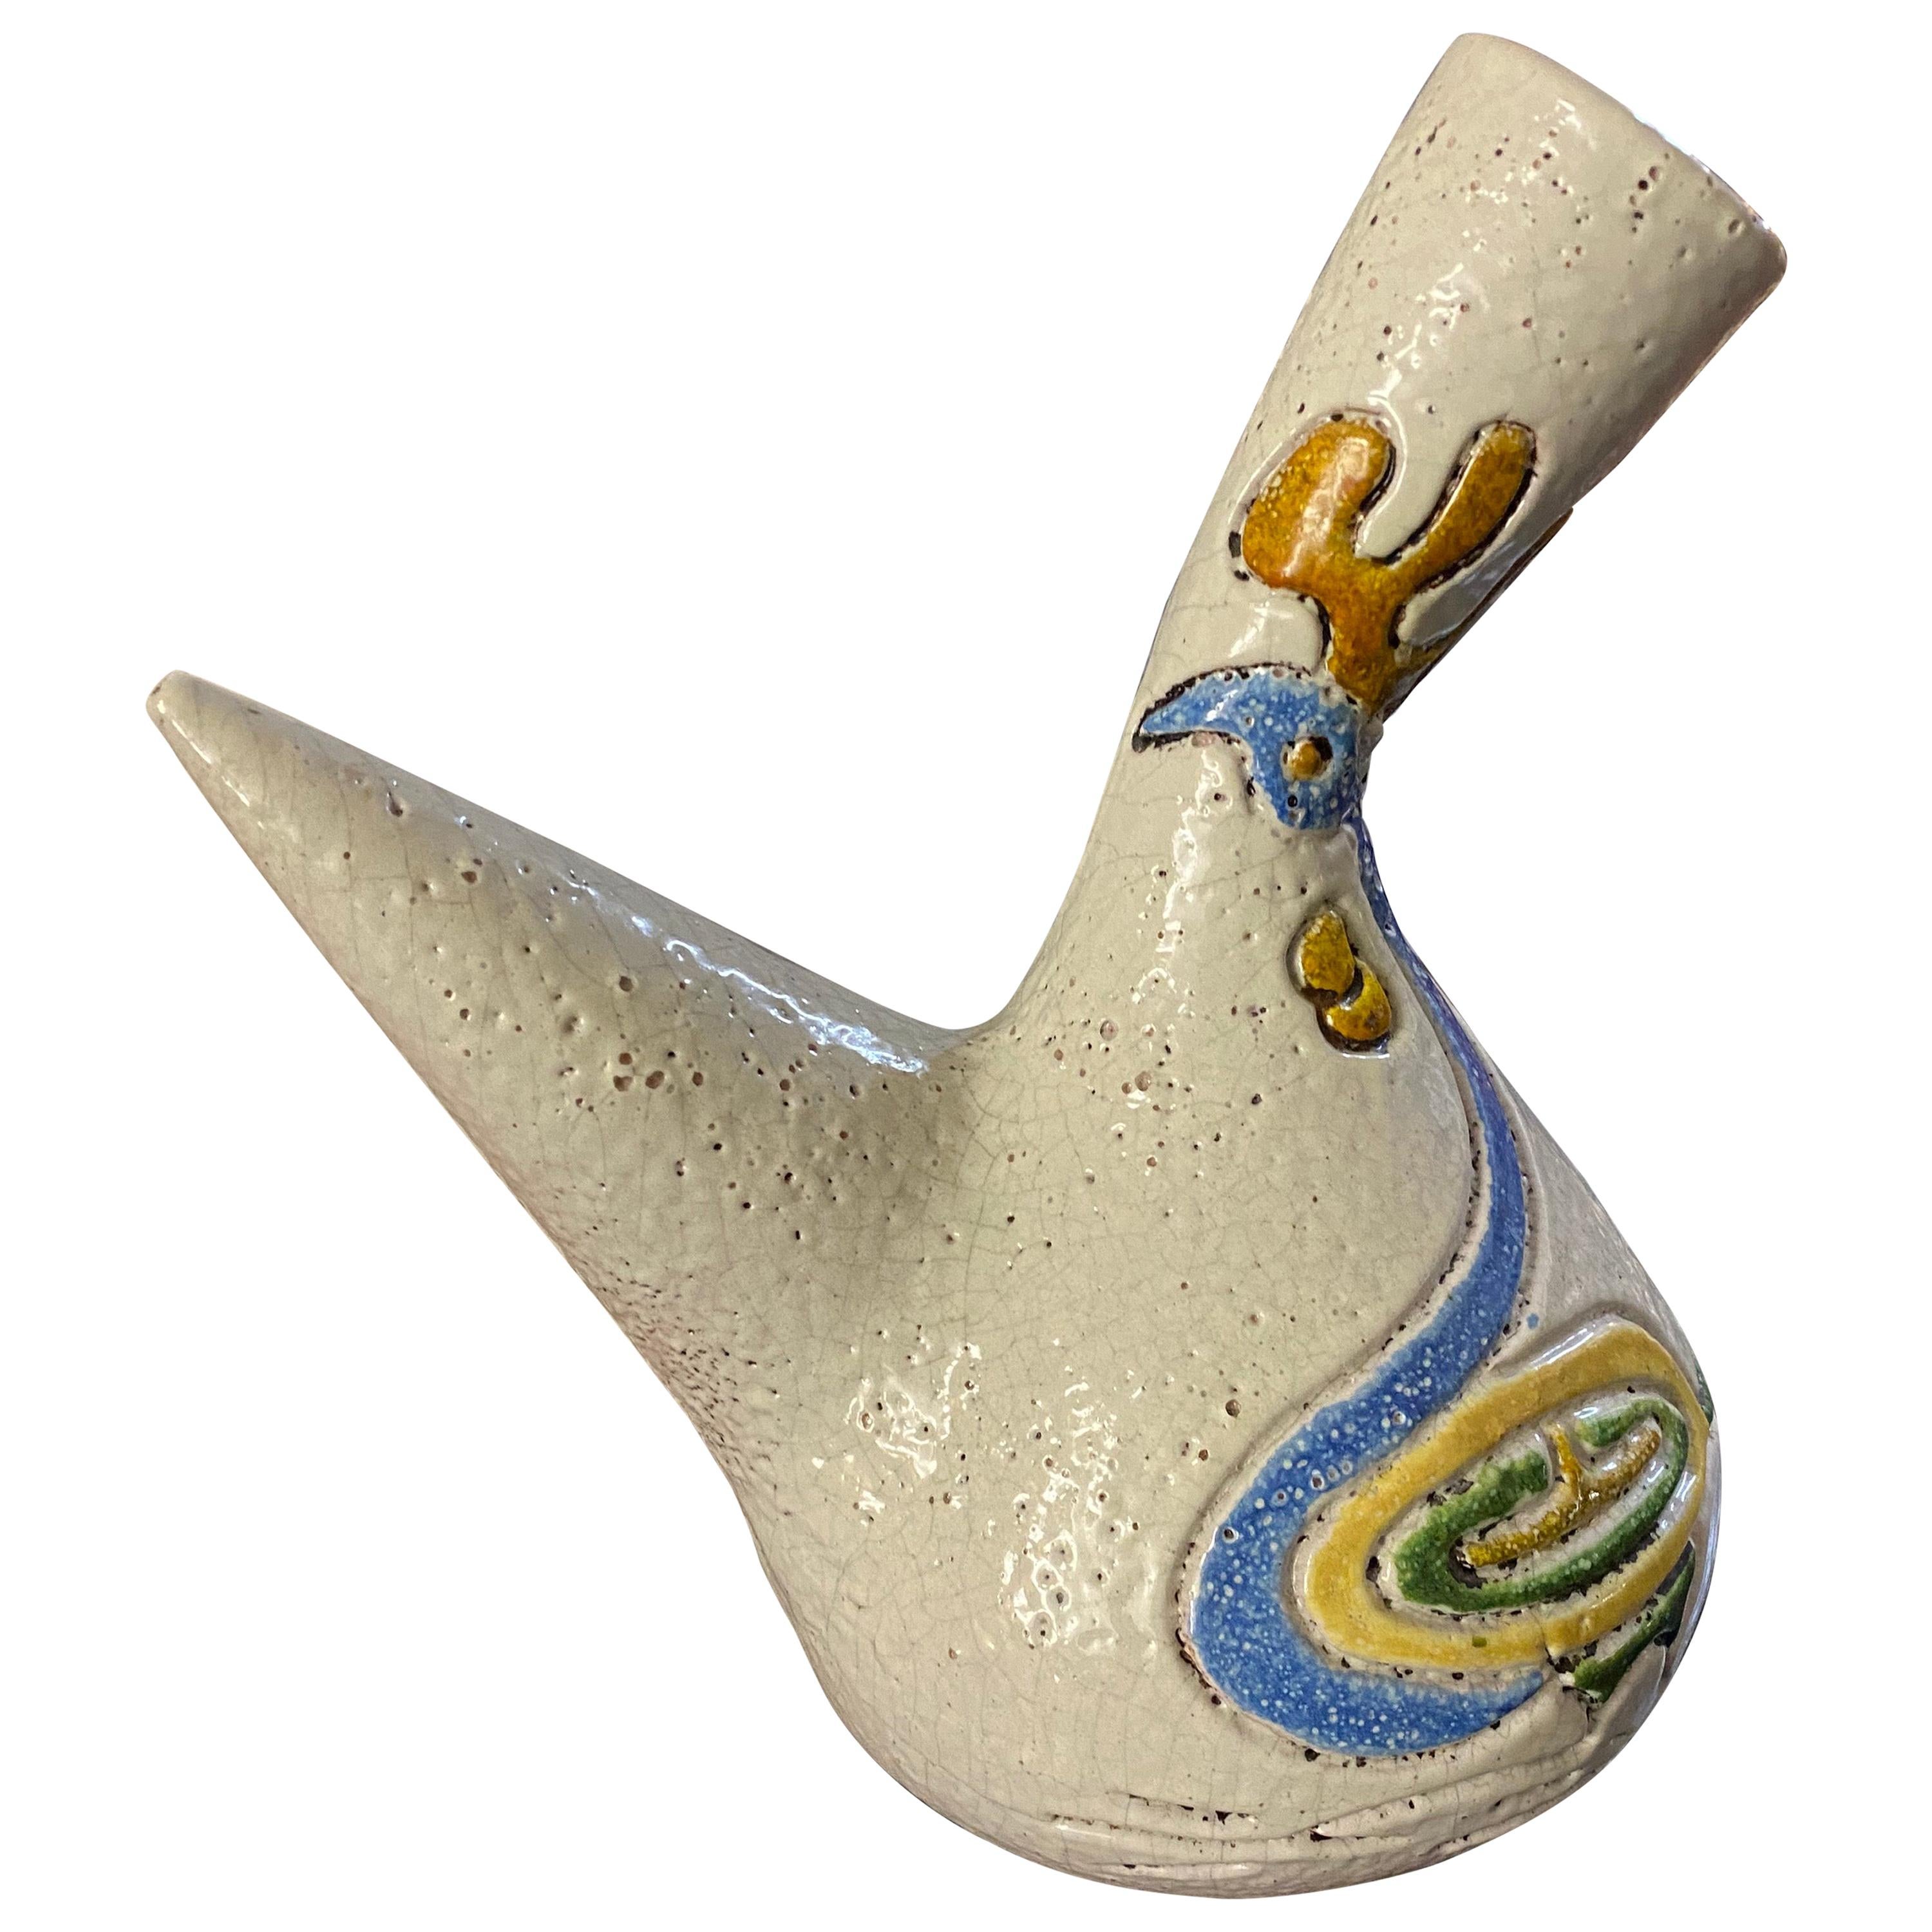 Accolay-Vase